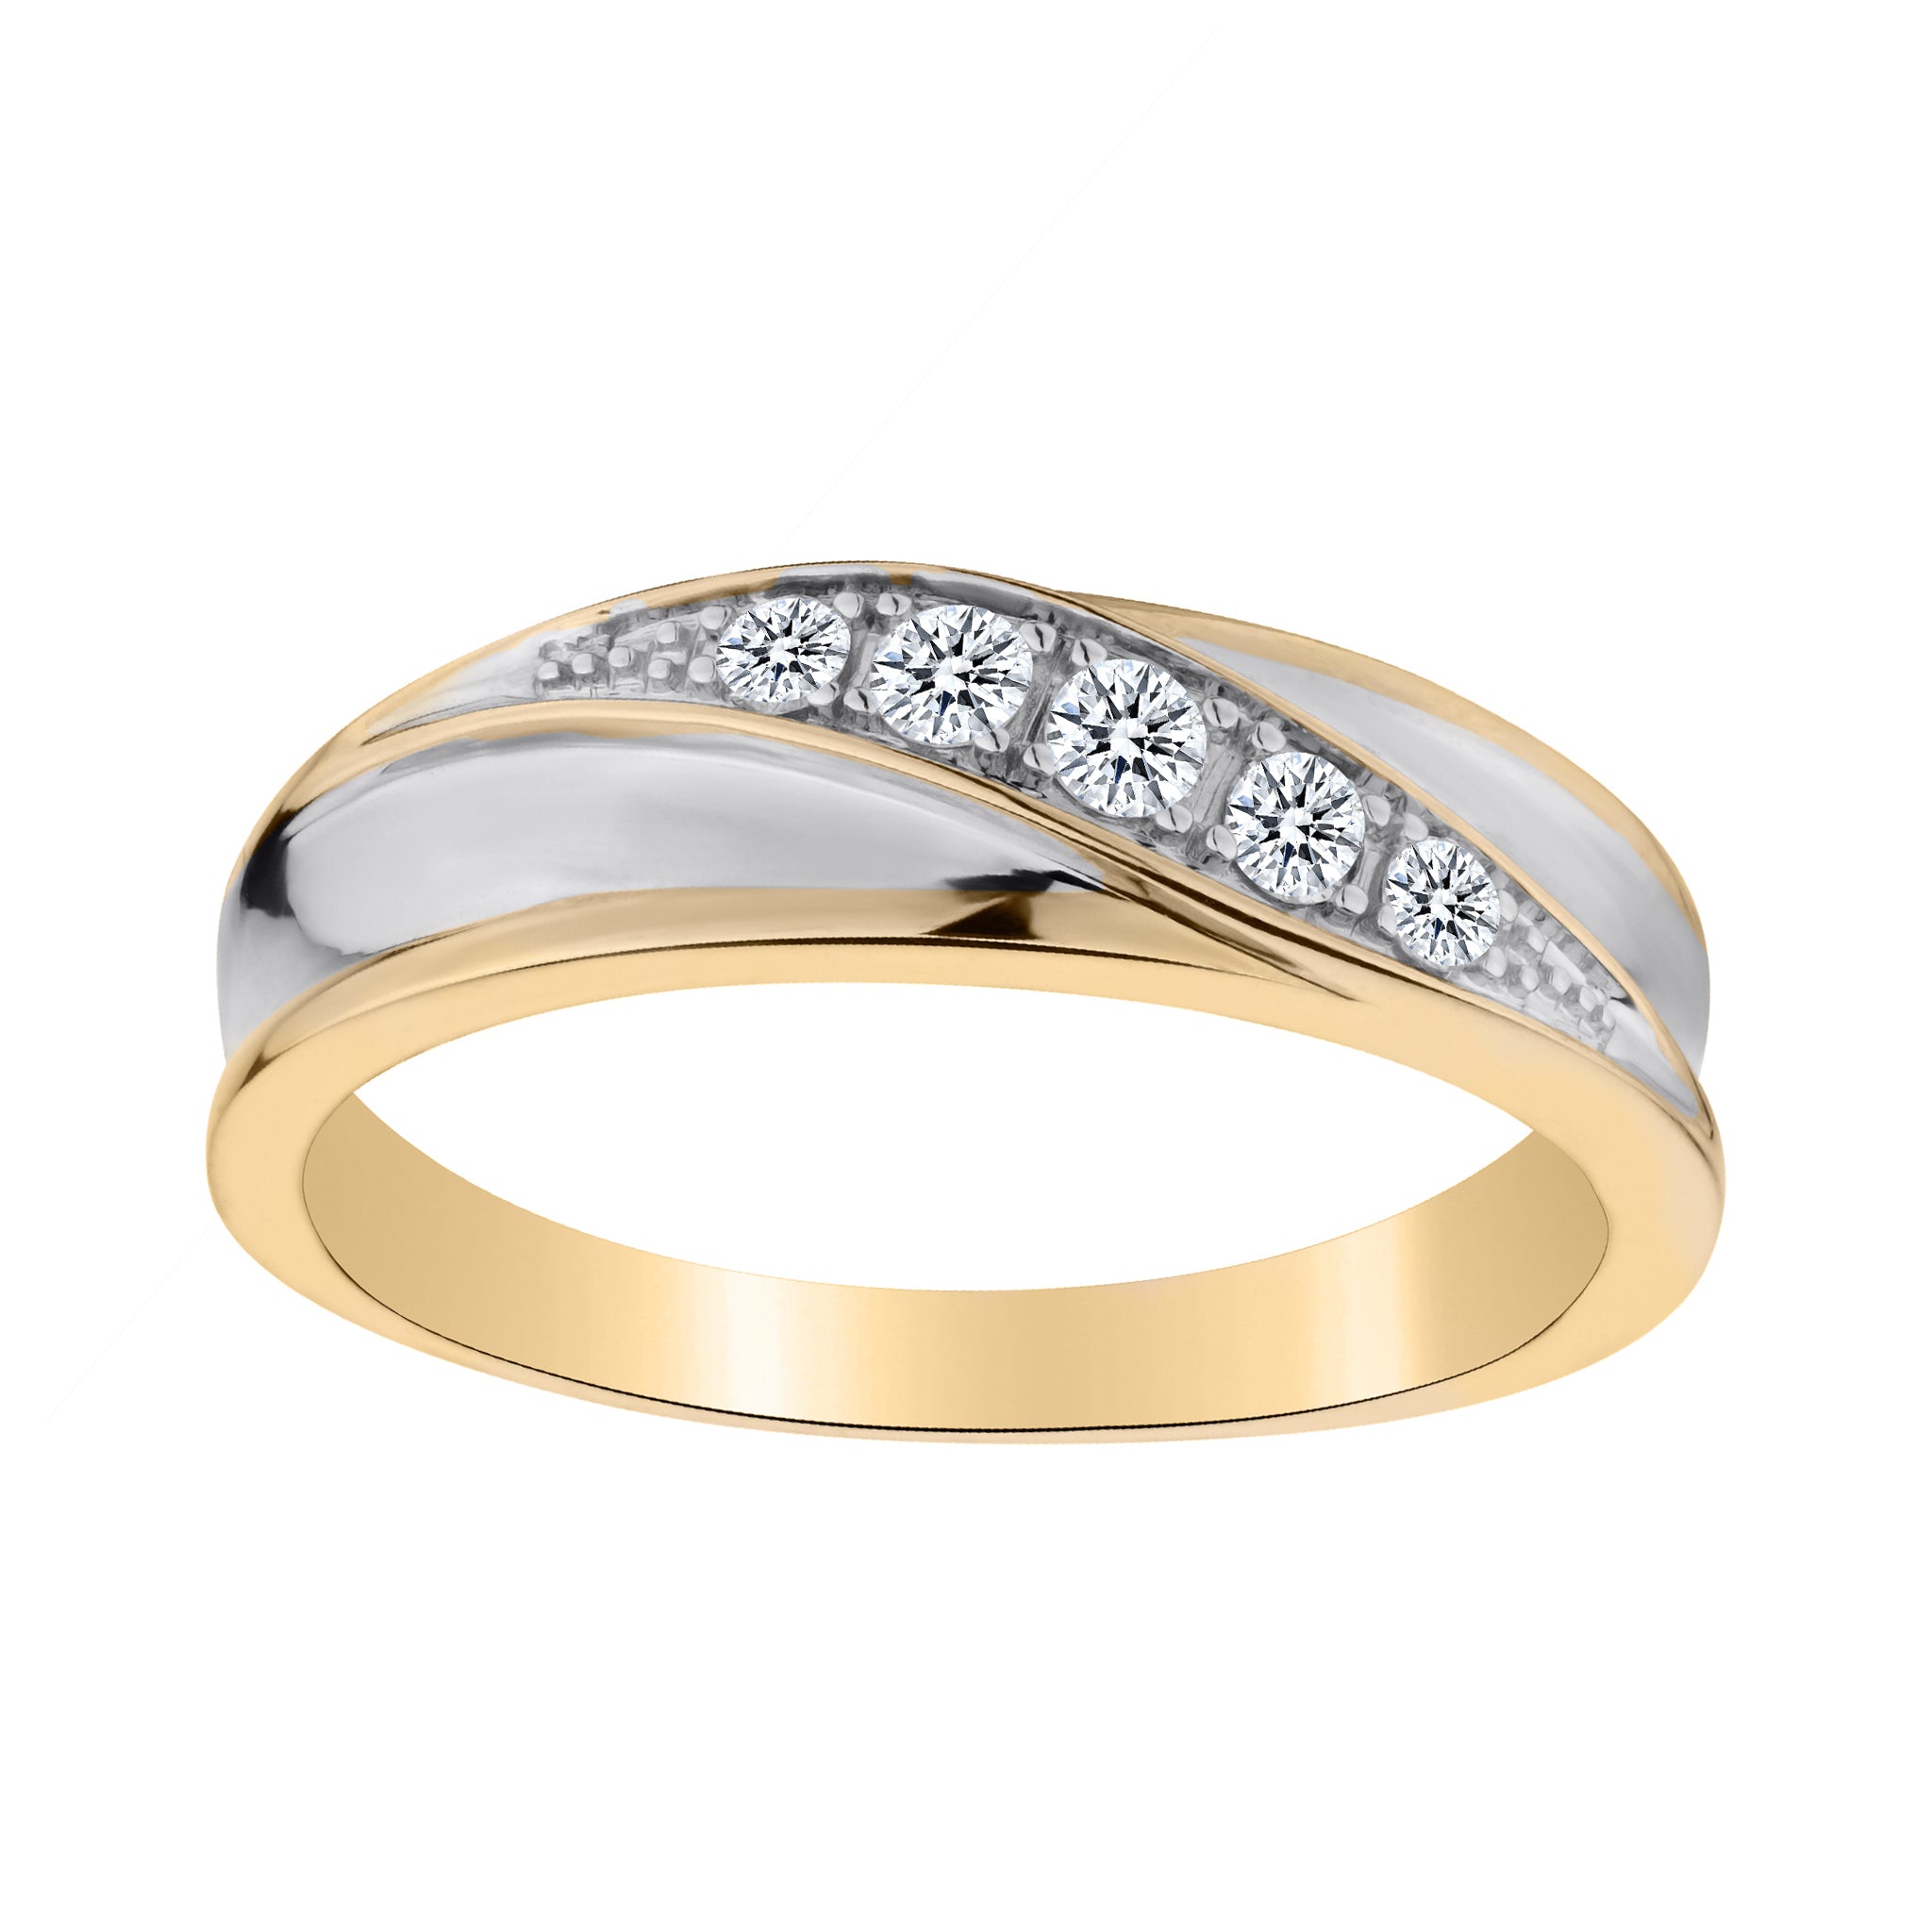 .25 CARAT DIAMOND GENTLEMAN'S RING, 10kt YELLOW GOLD.....................NOW - Griffin Jewellery Designs